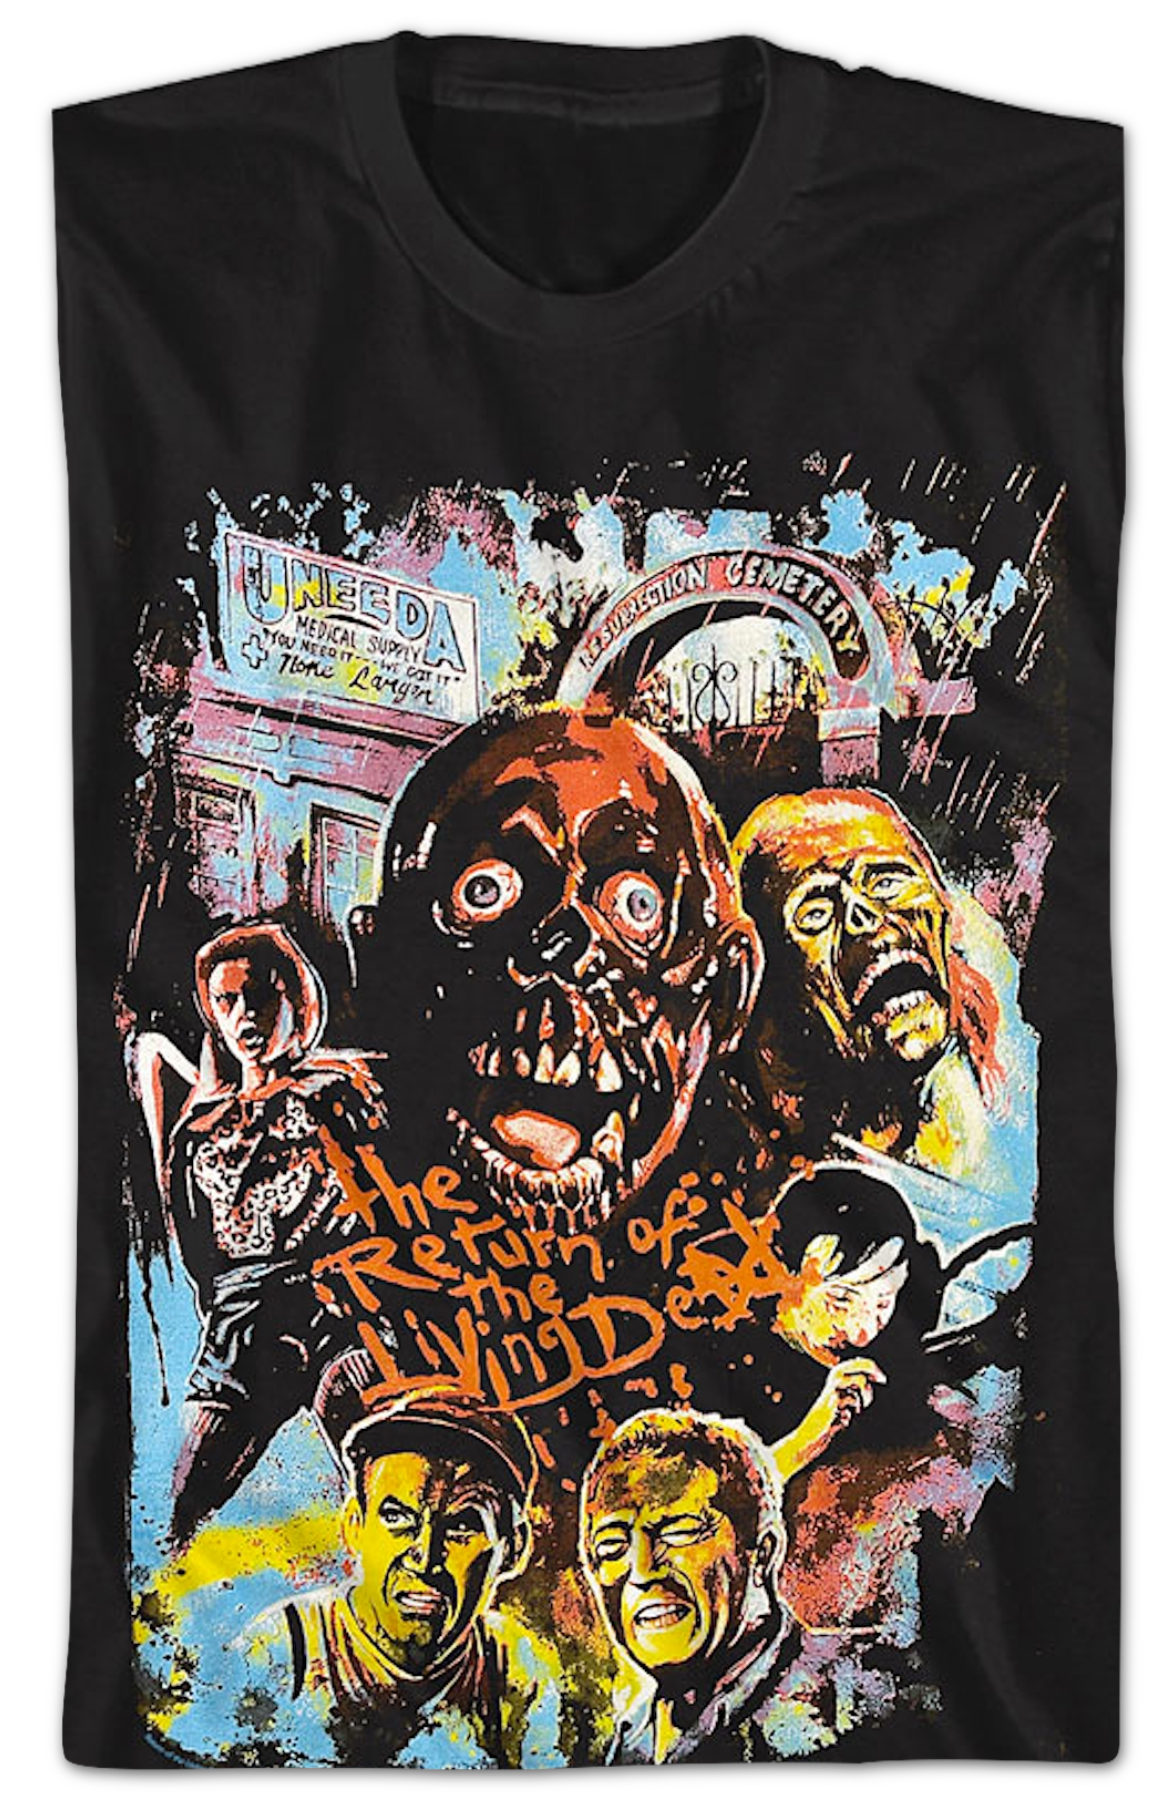 Vintage Collage Return Of The Living Dead T-Shirt